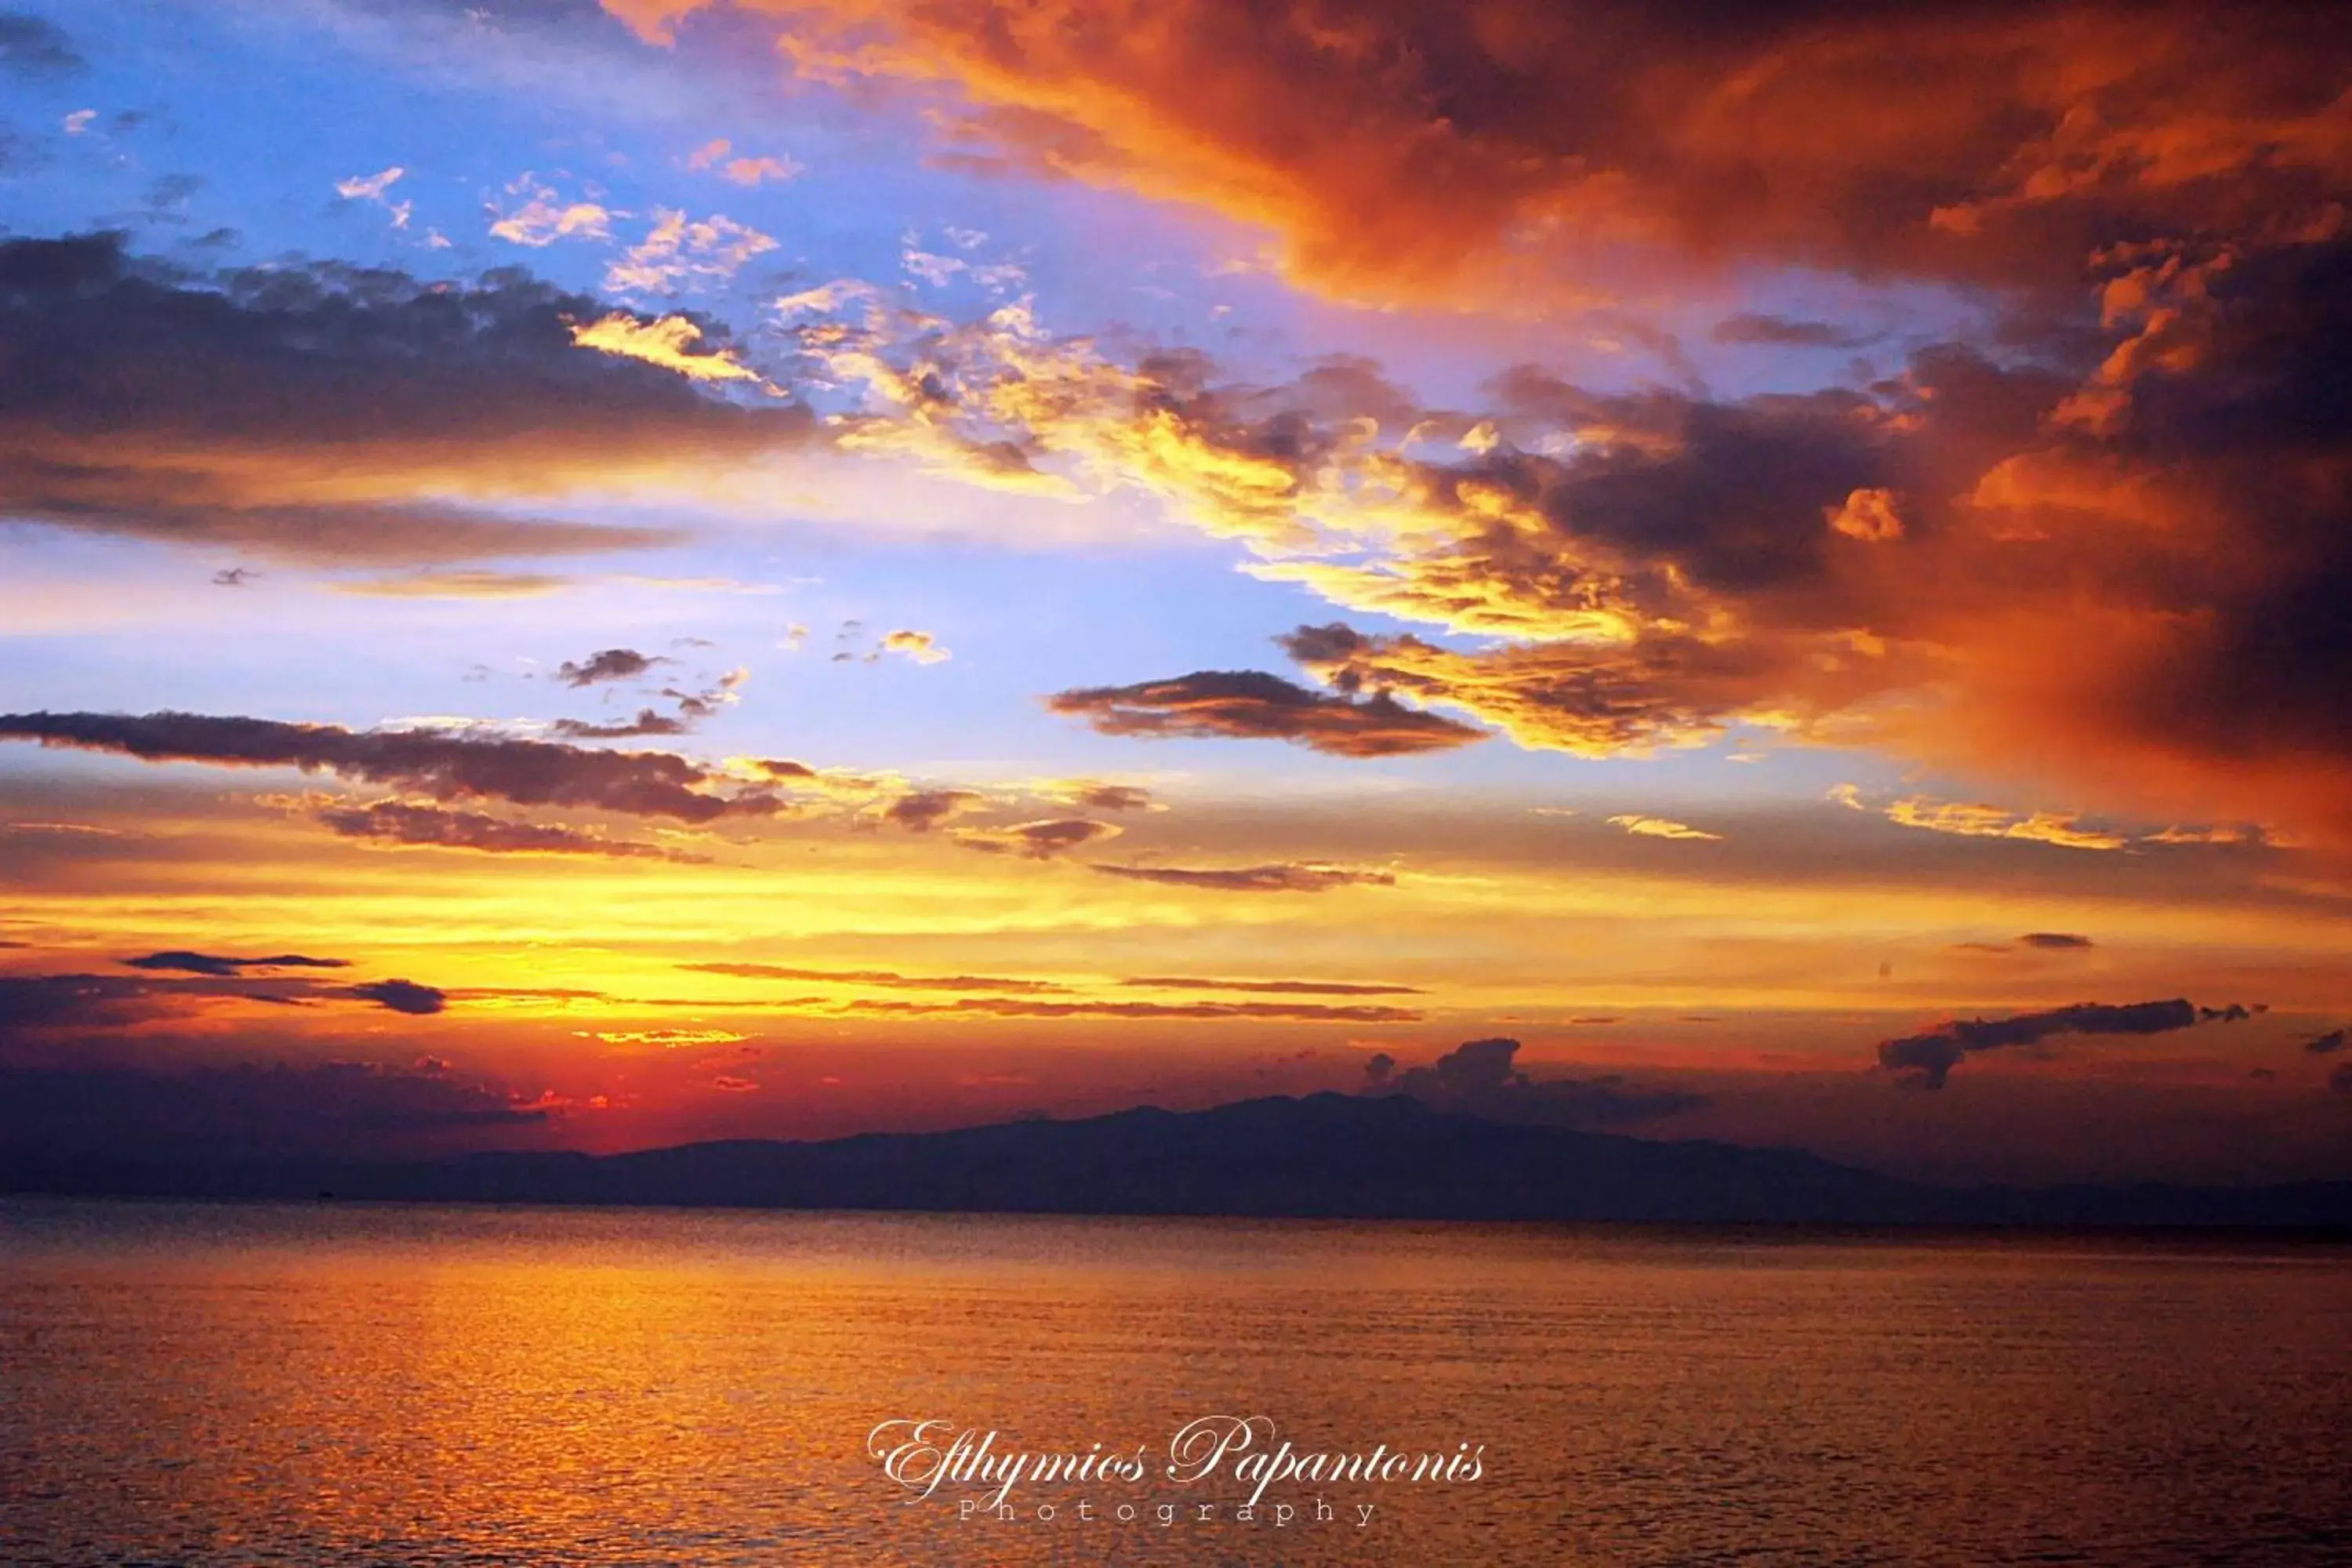 Off site, Sunrise/Sunset in Macedon